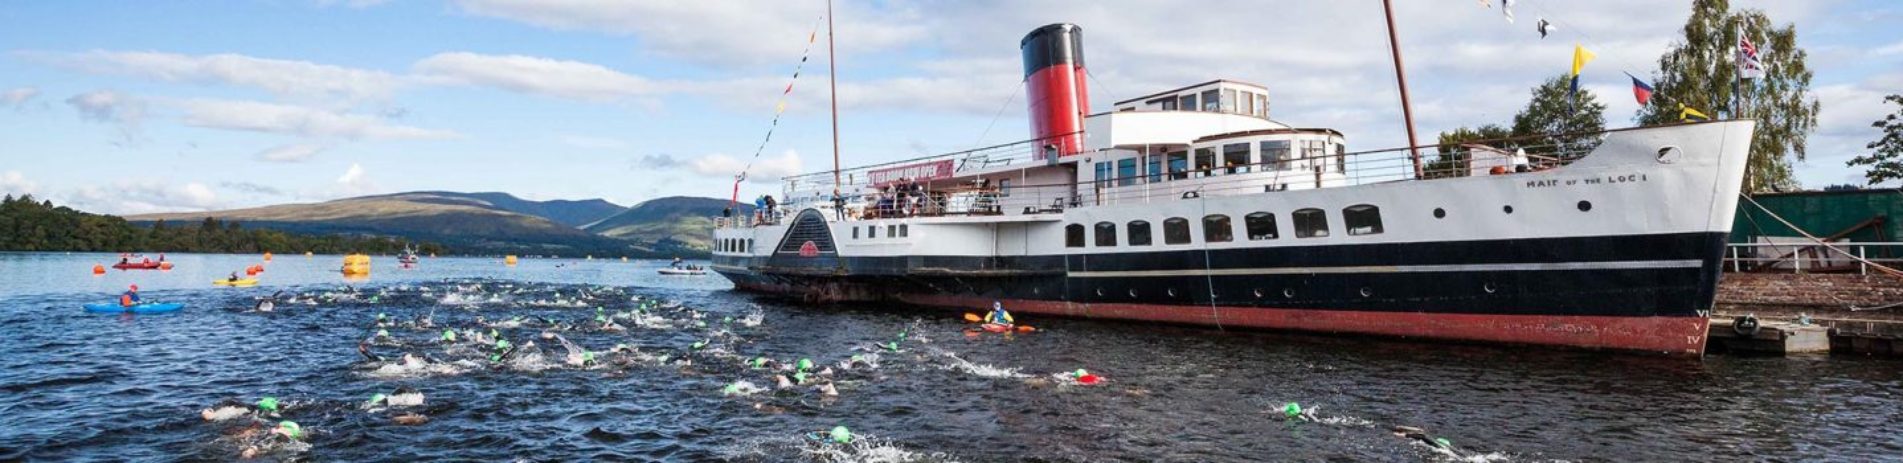 great-scottish-swim-in-loch-lomond-dozens-of-swimmers-wearing-coloured-caps-swim-next-to-maid-of-the-loch-steamship